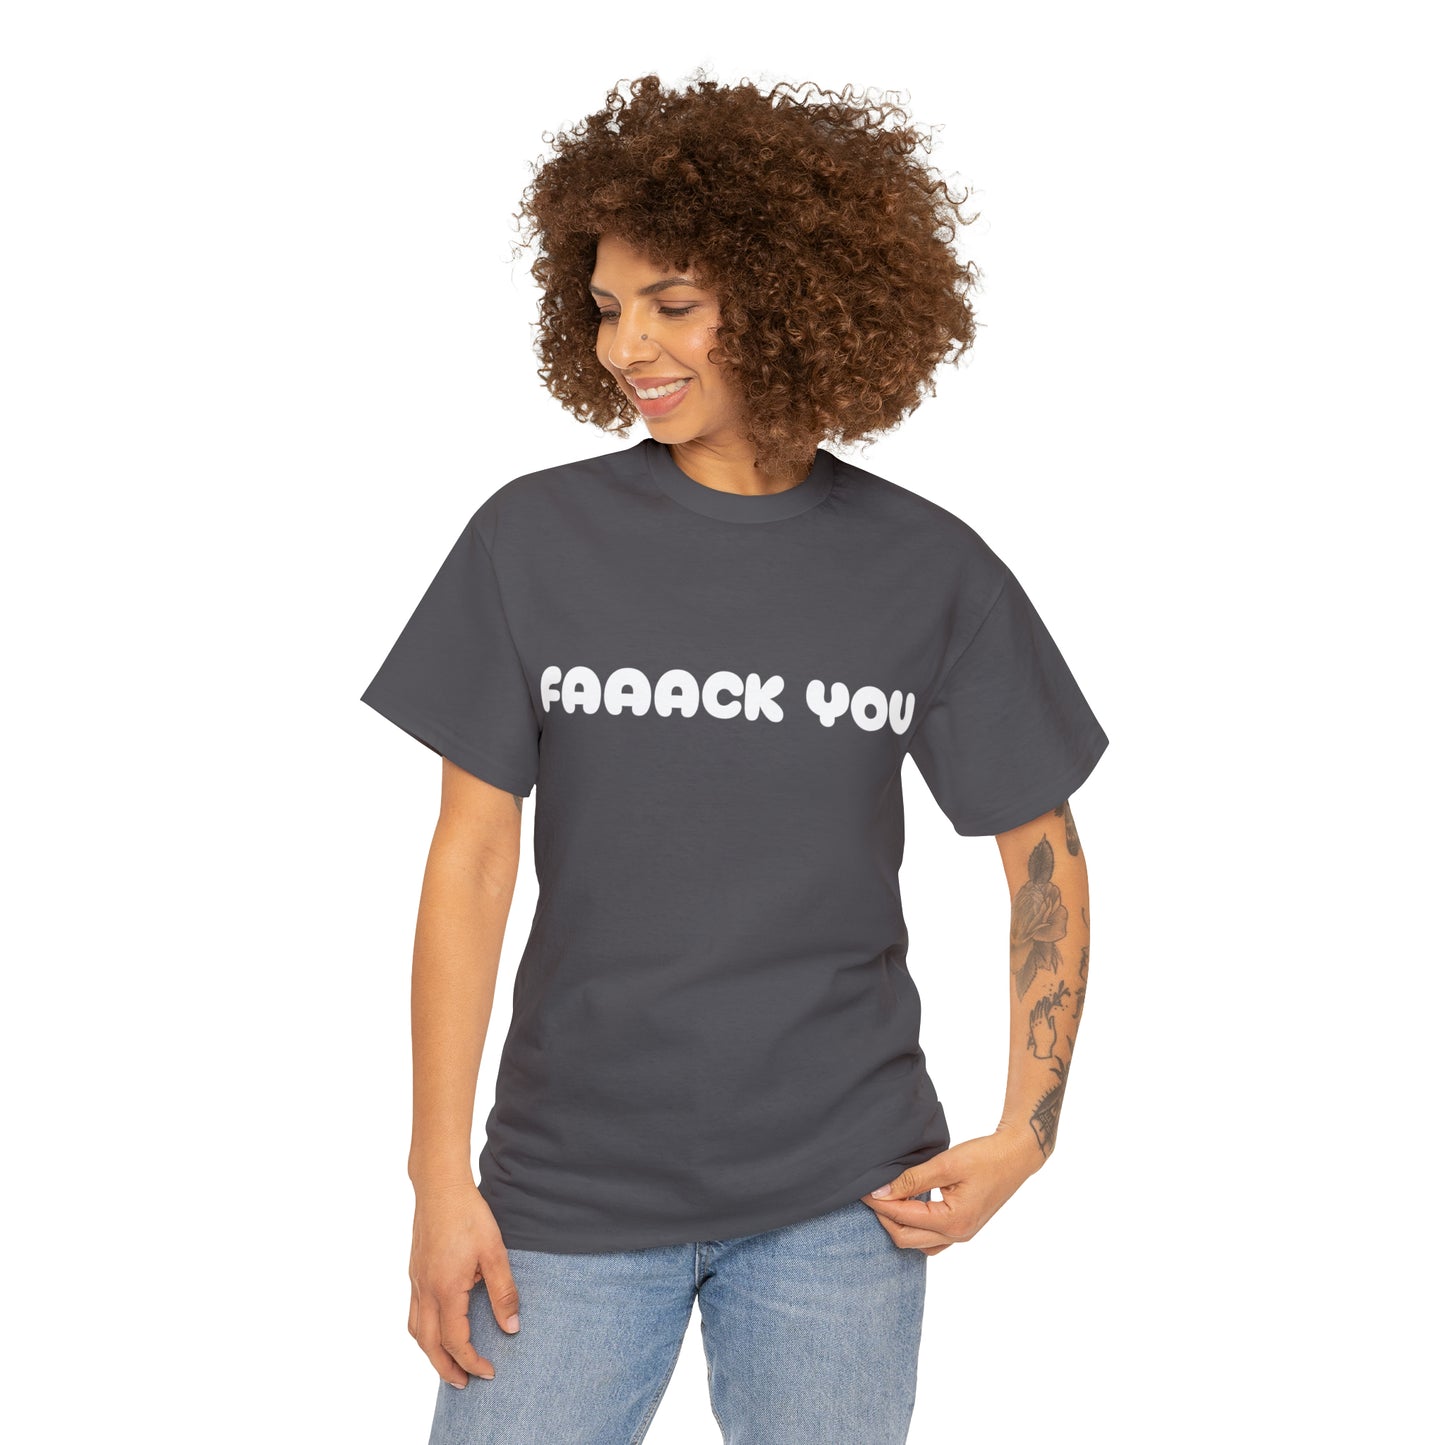 FAAACK YOU Camiseta unisex de algodón pesado